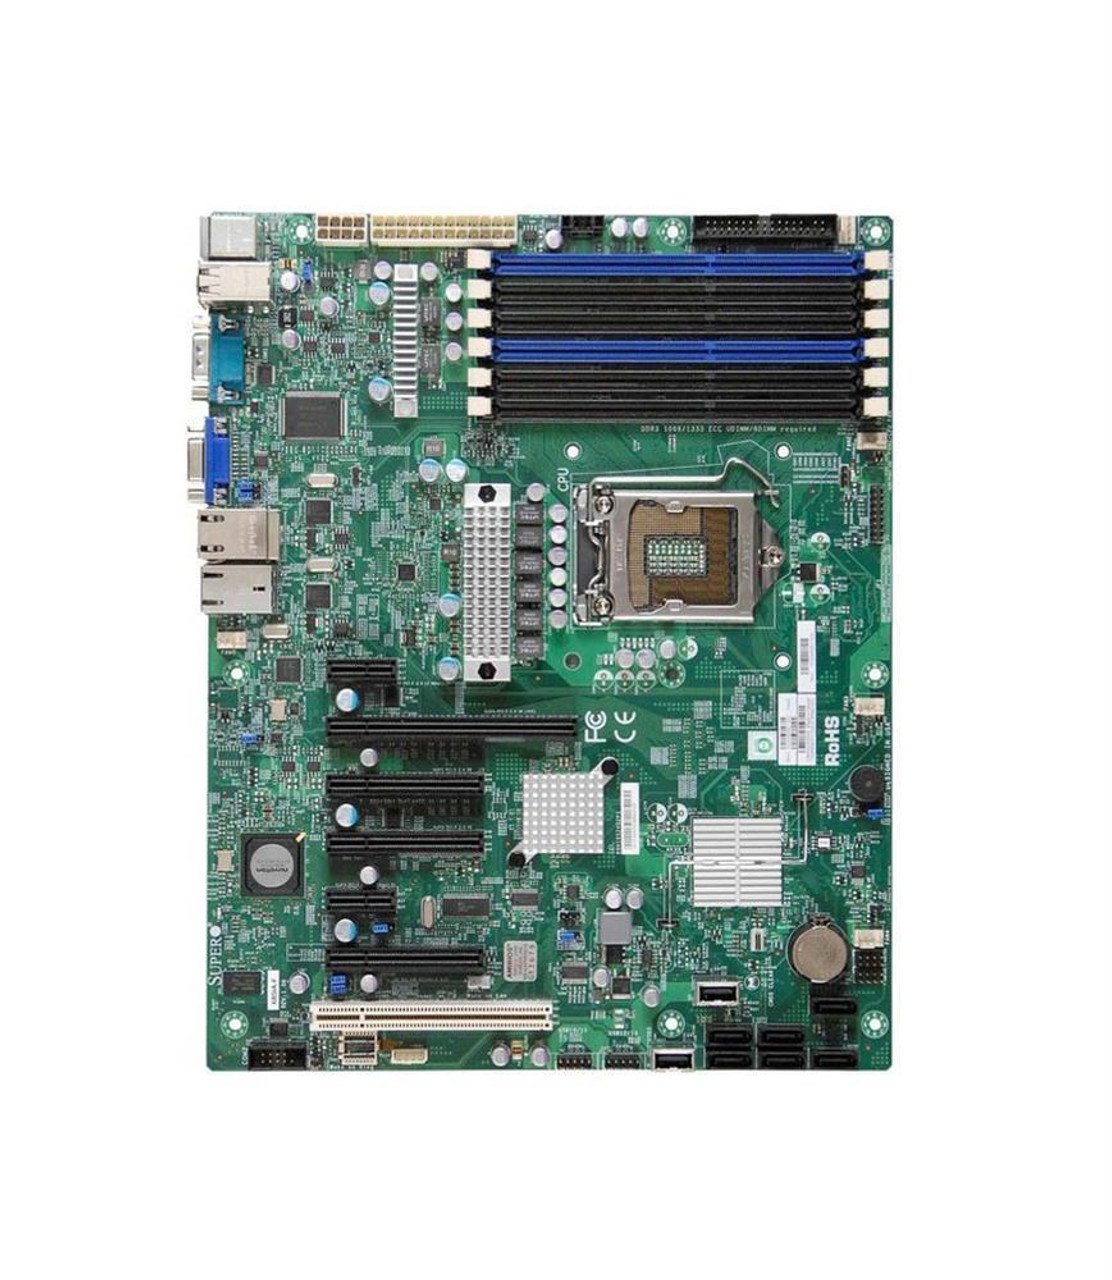 MBD-X8SIA-O SuperMicro X8SIA Socket LGA1156 Intel 3420 Chipset ATX Server Motherboard (Refurbished)